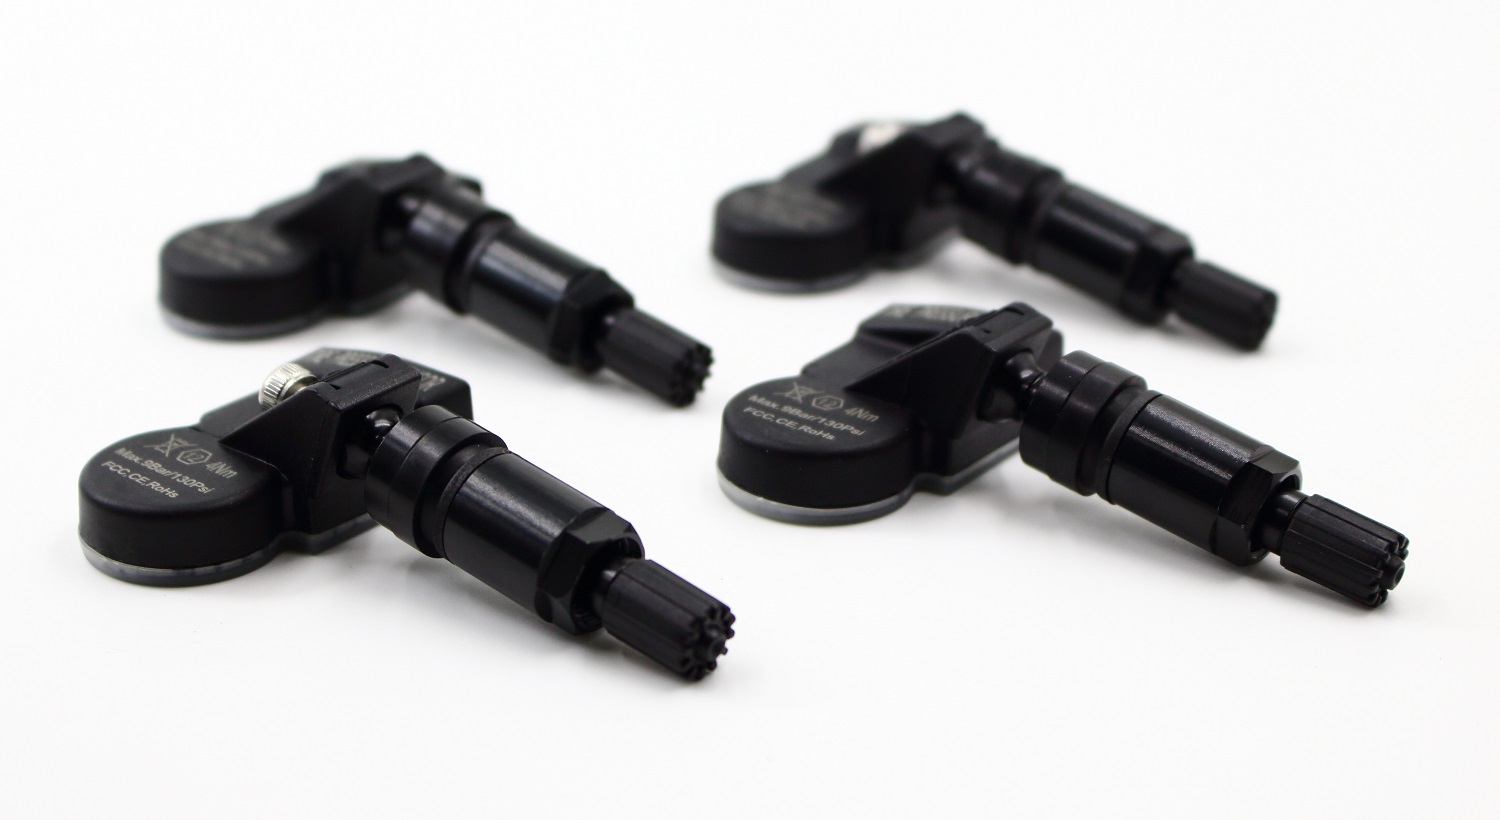 Gloss Black ITM Set of 4 08017DXS 433mhz TPMS Tire Pressure Sensors Replaces Mini OE Part Number 36106881890 w/Gloss Black or Matte Black Aluminum Valve Stems Replacement 